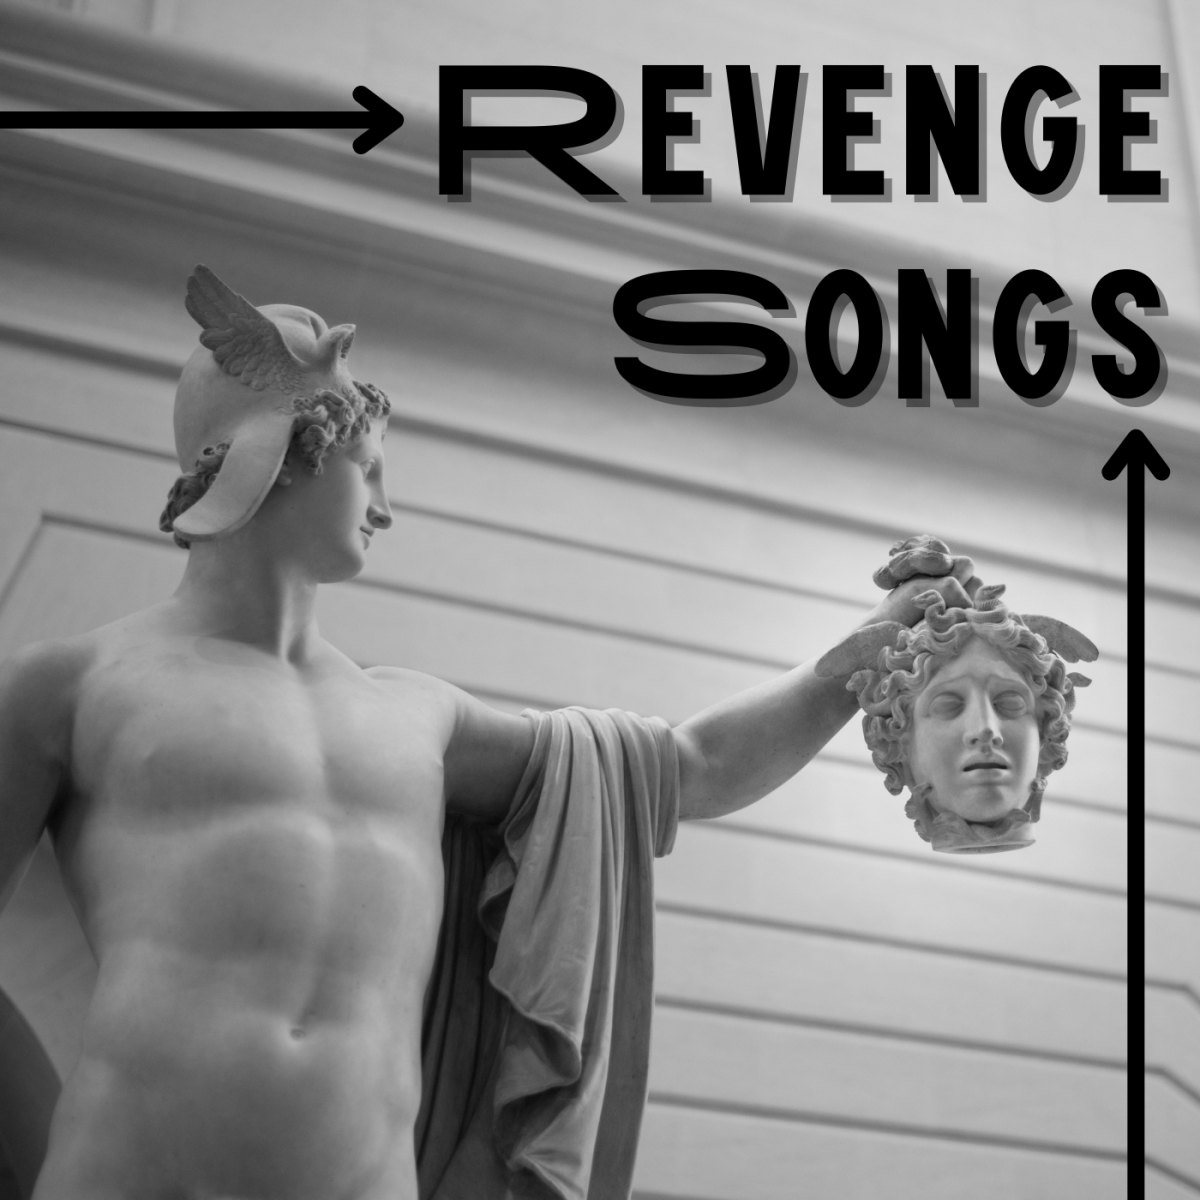 When revenge calls, put on this playlist!